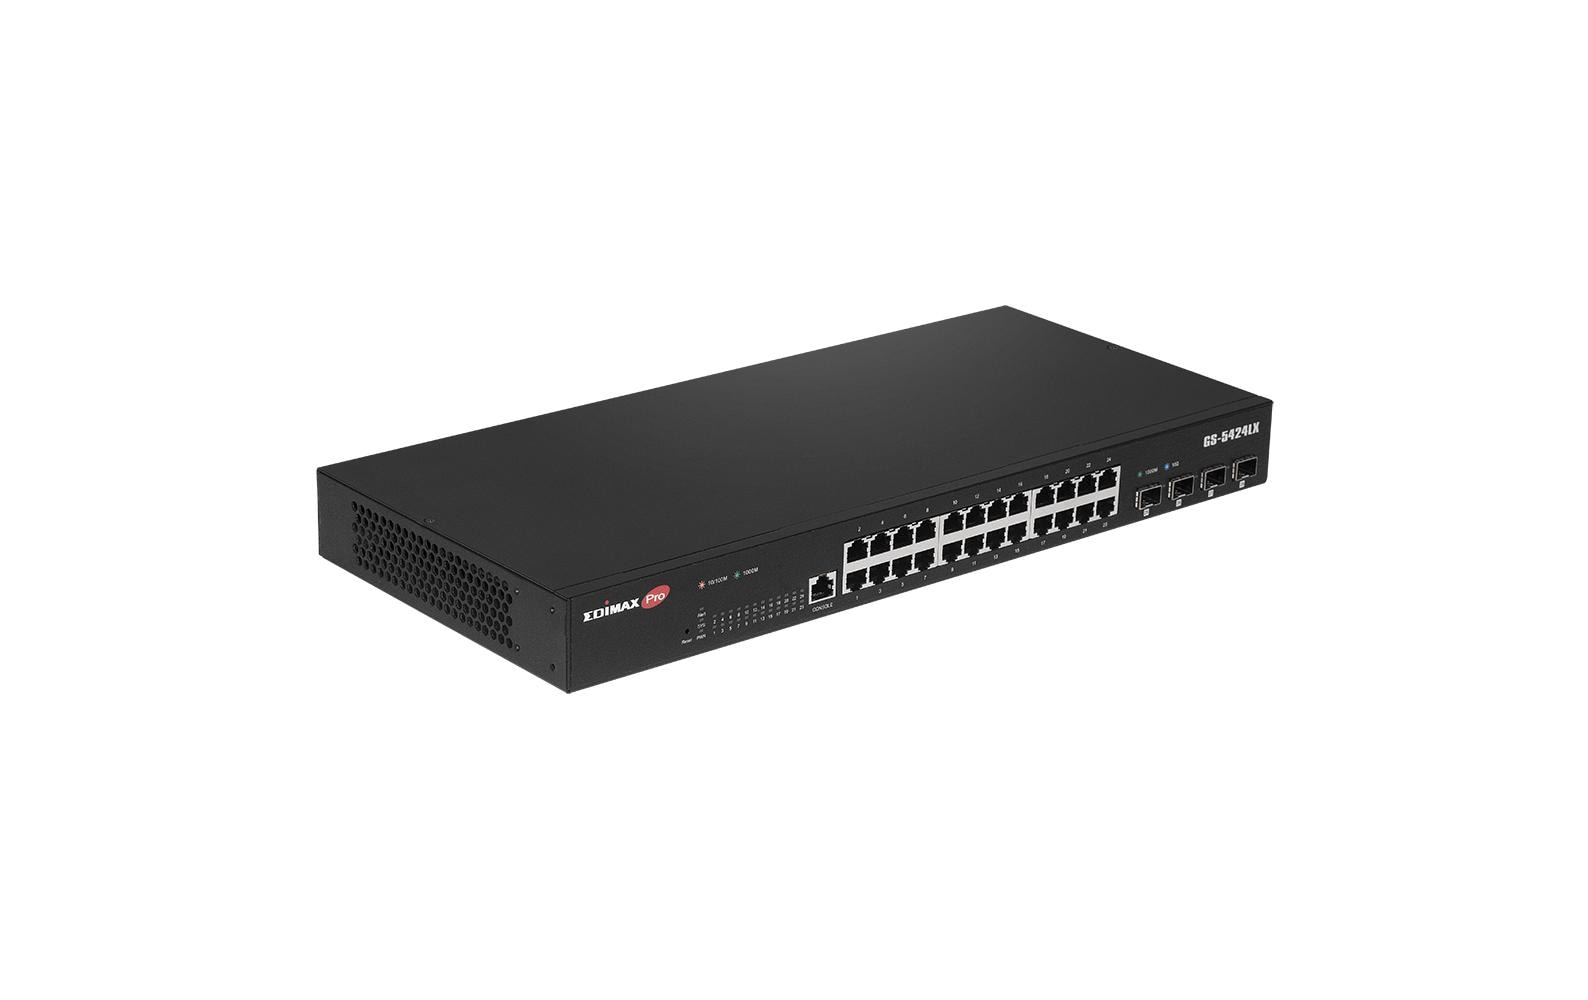 Edimax Pro Switch GS-5424LX 28 Port